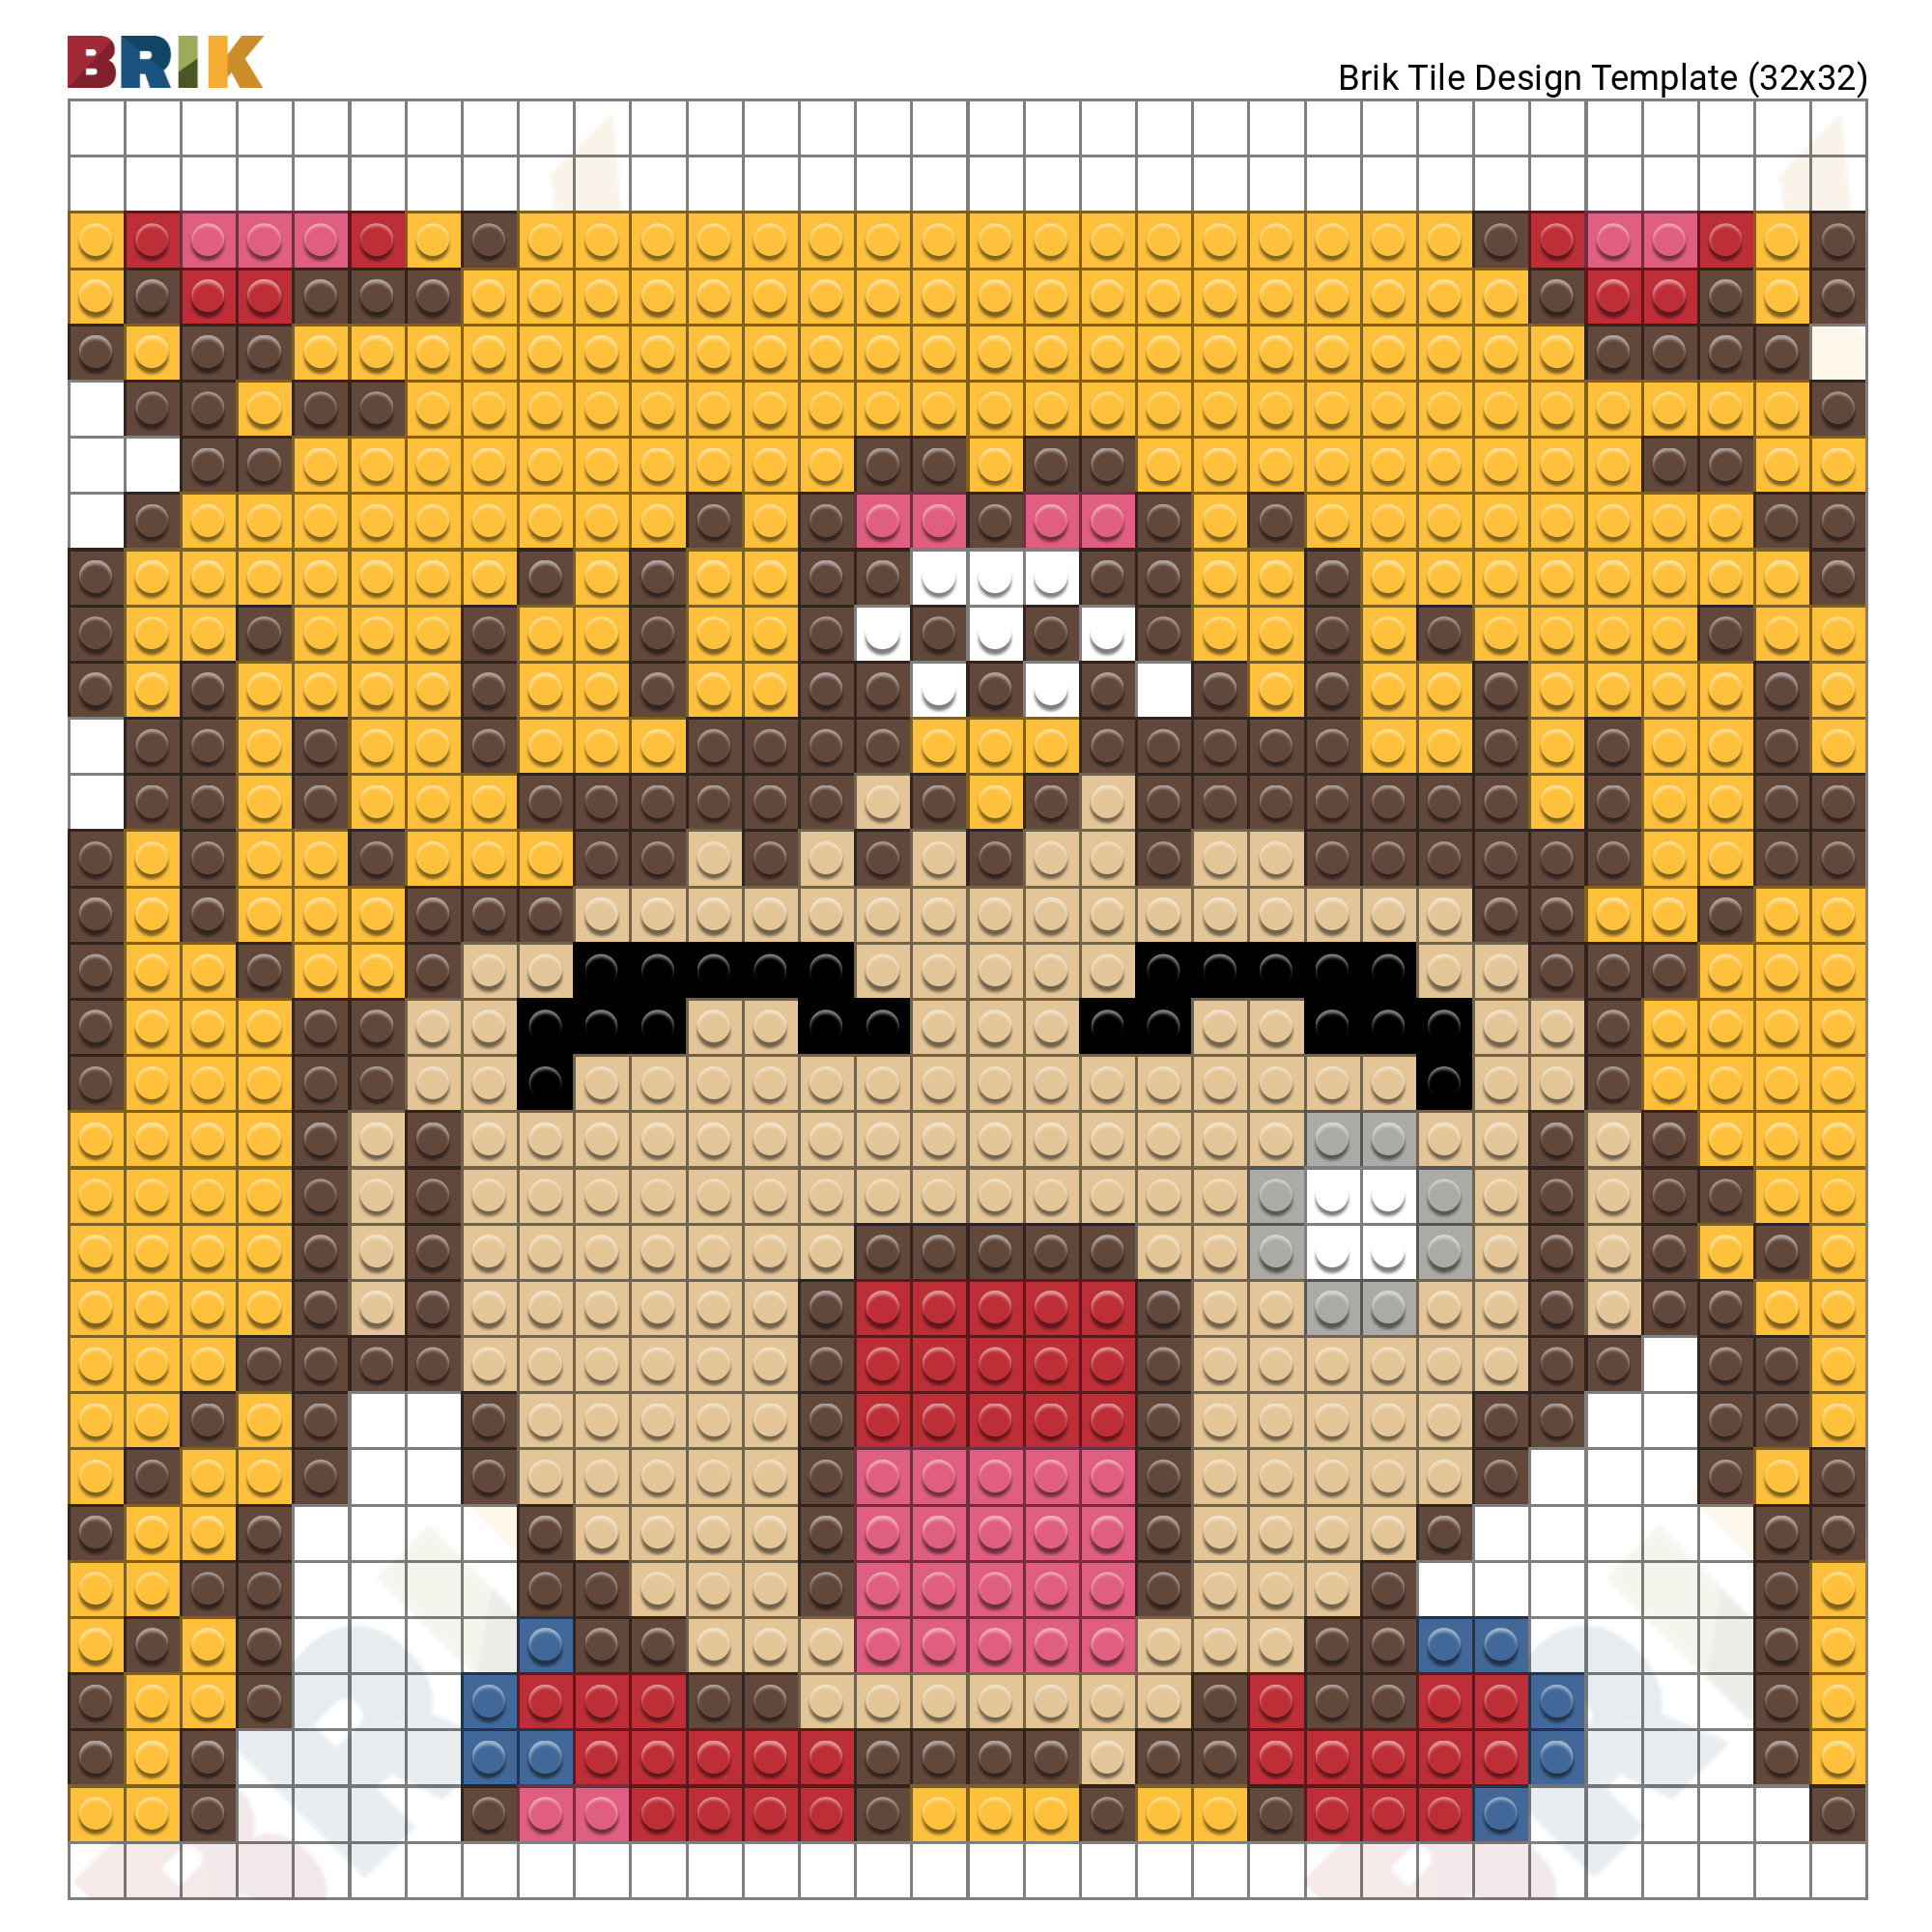 Divoom Pixel Art Wall Frame 32x32 / Pixoo Max | eBay